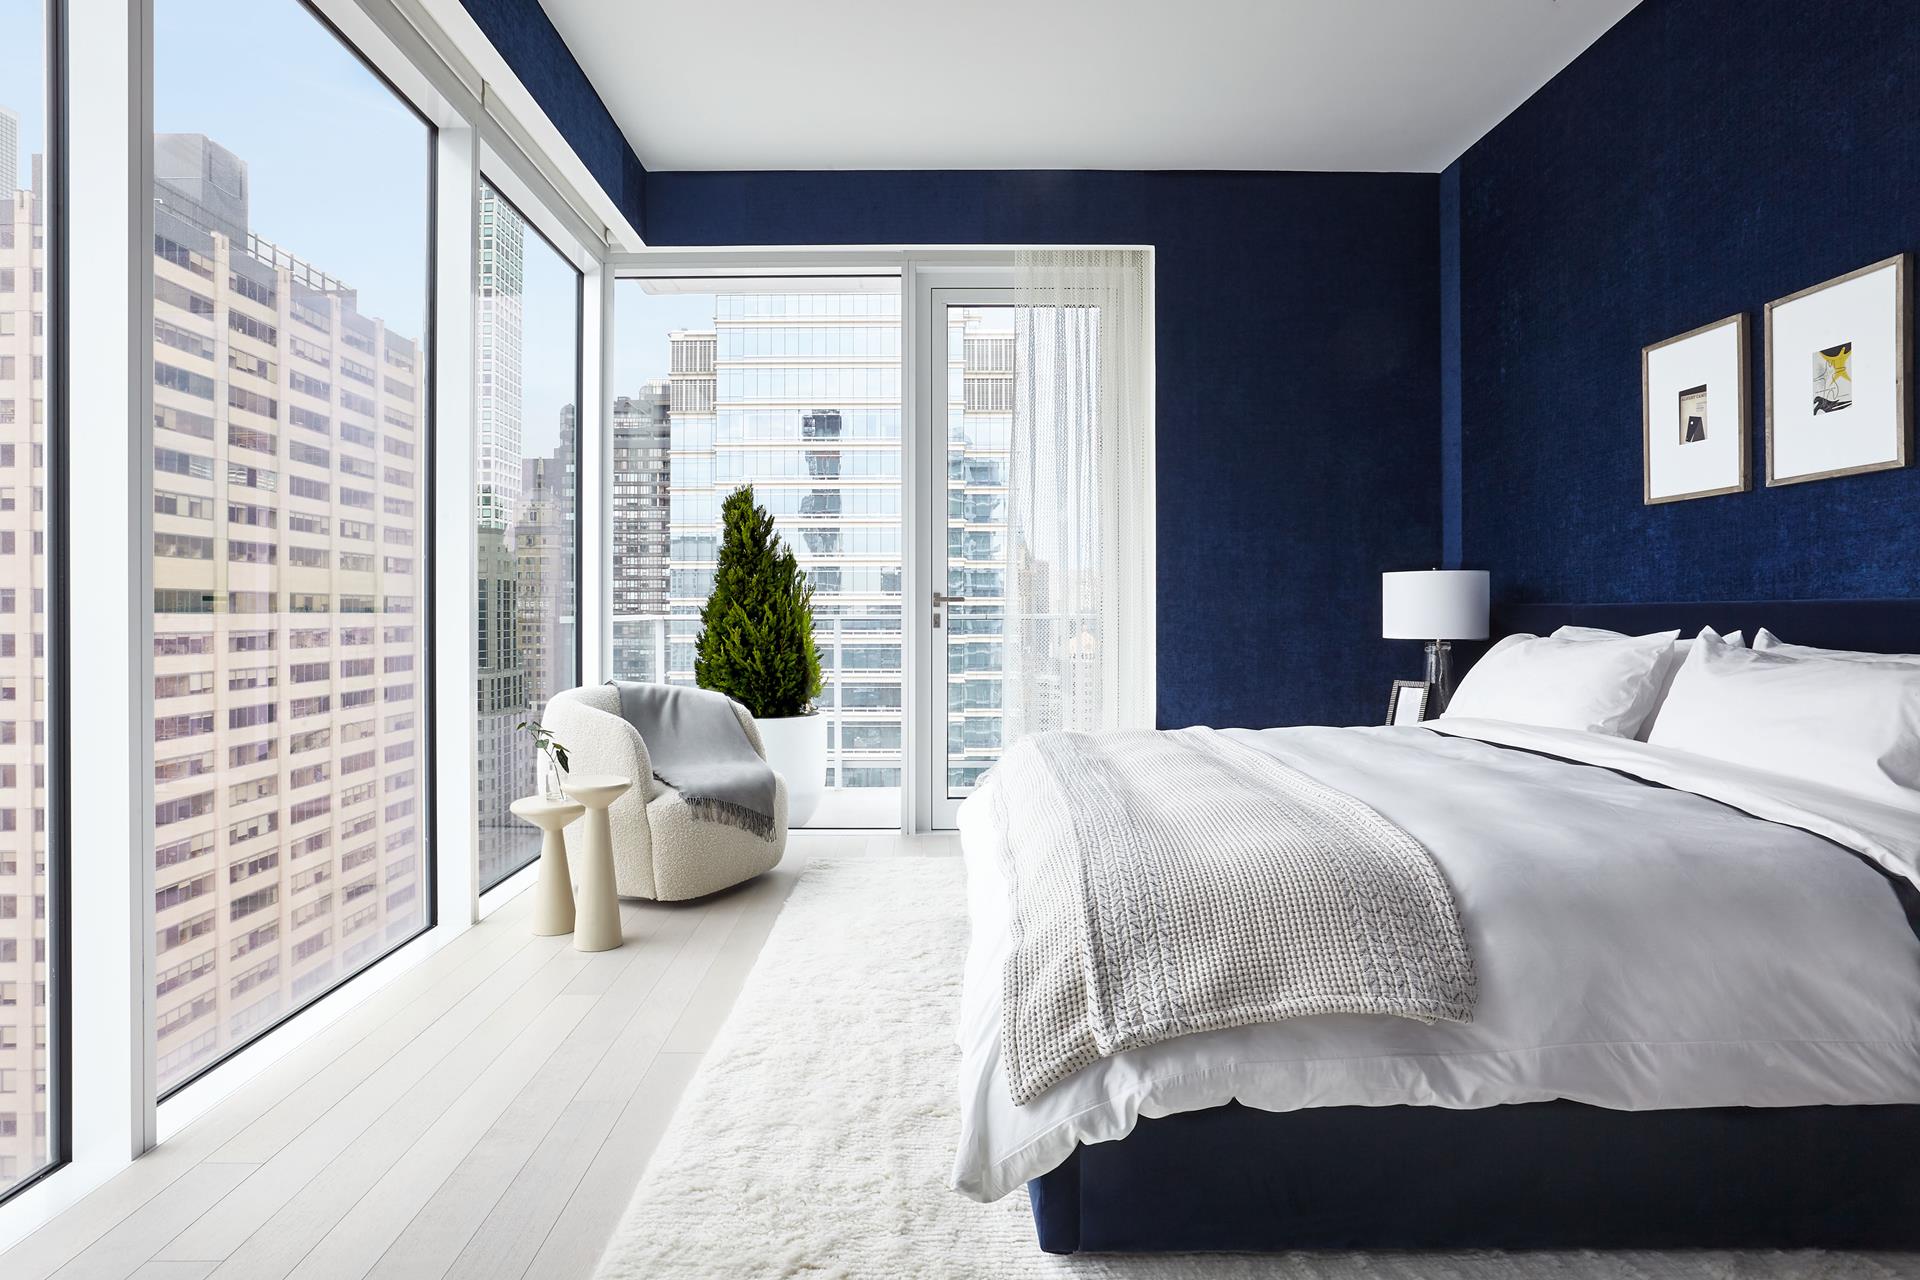 200 East 59th Street brings indoor-outdoor living in the heart of Manhattan